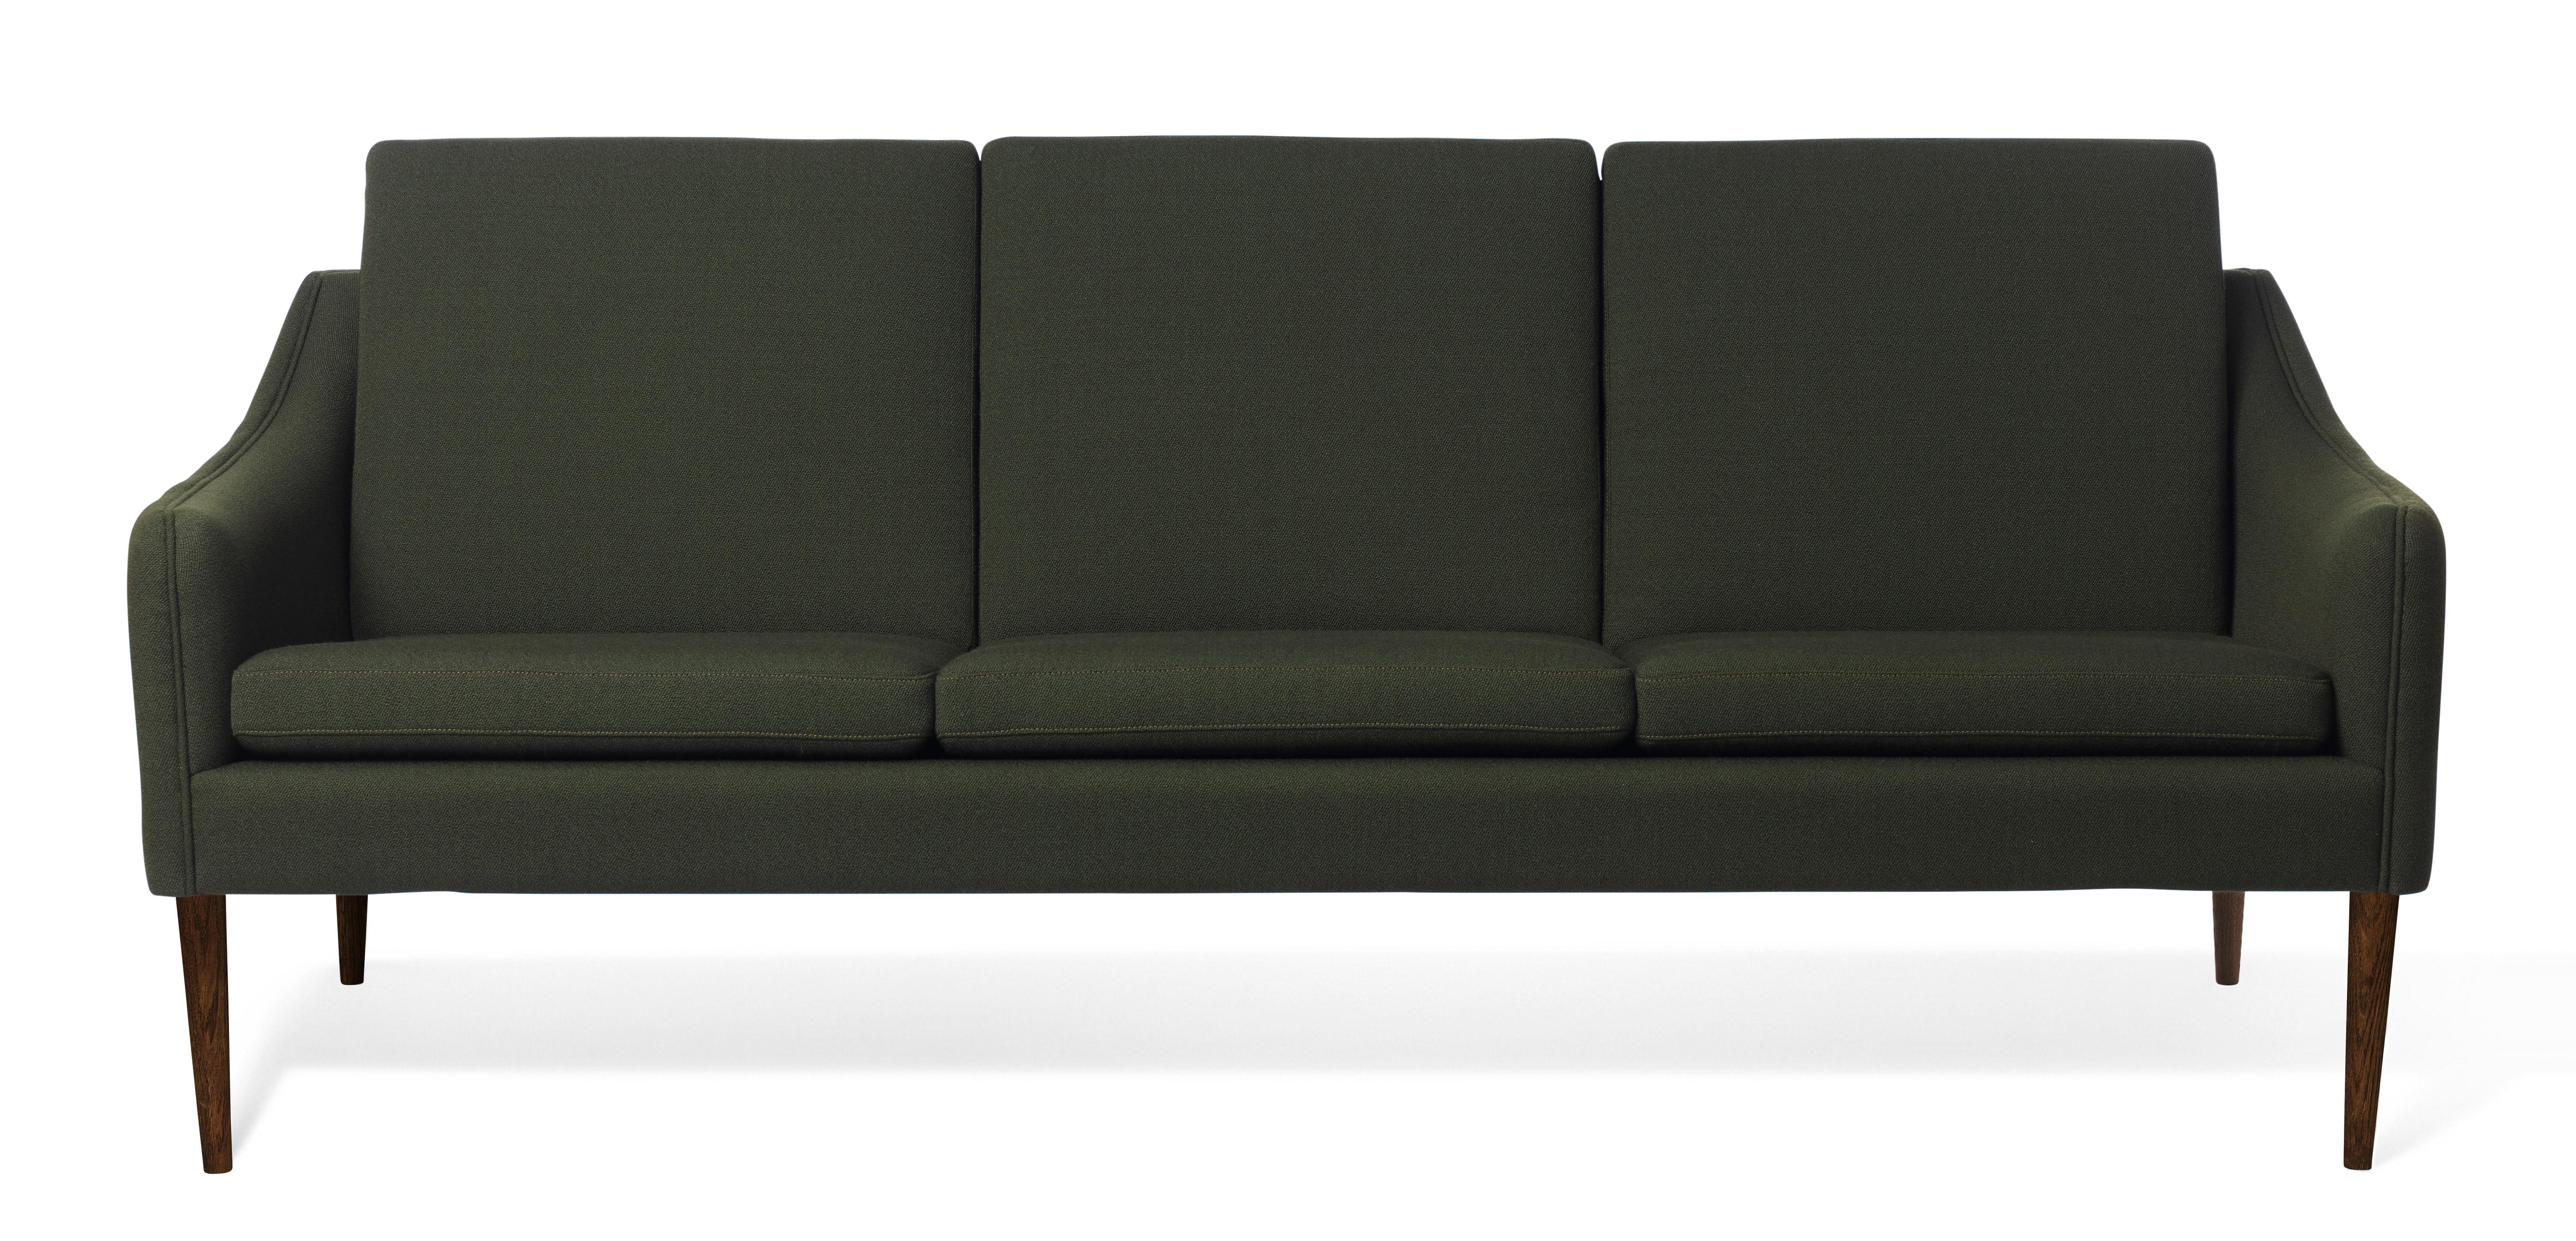 For Sale: Green (Vidar 972) Mr. Olsen 3-Seat Sofa with Walnut Legs, by Hans Olsen from Warm Nordic